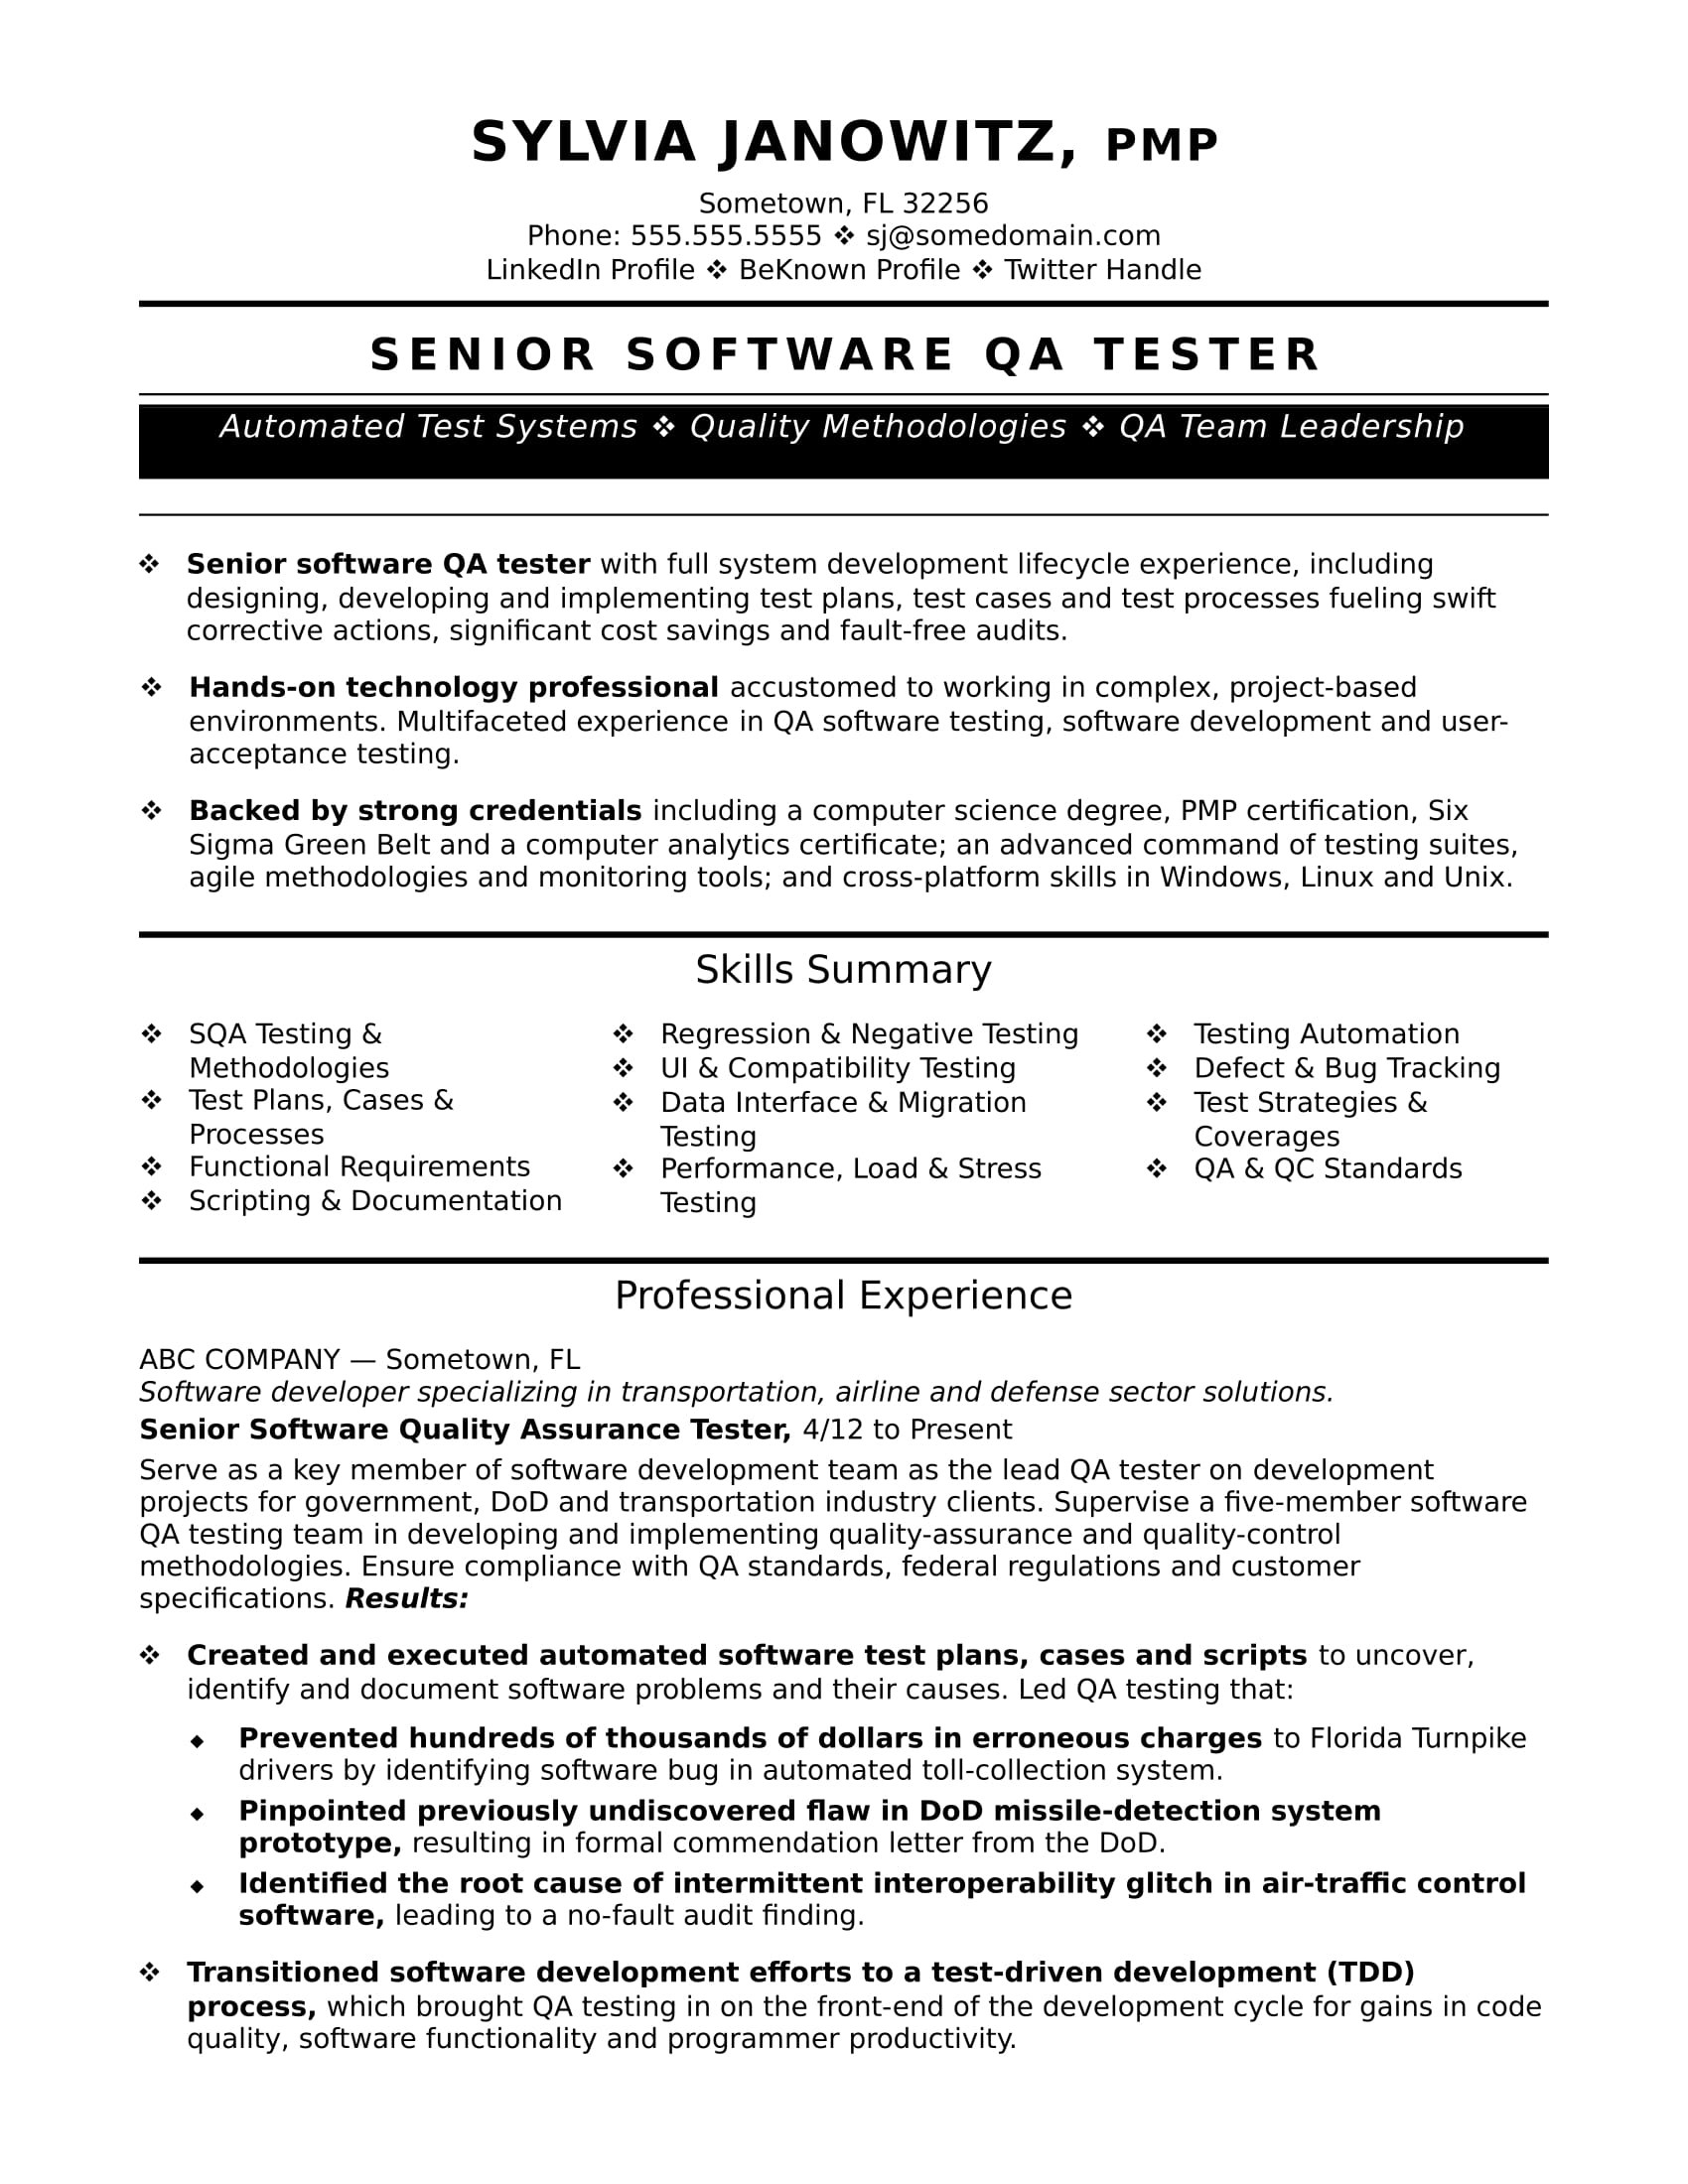 Manual Testing Resume Samples 2 Years Experience Experienced Qa software Tester Resume Sample Monster.com